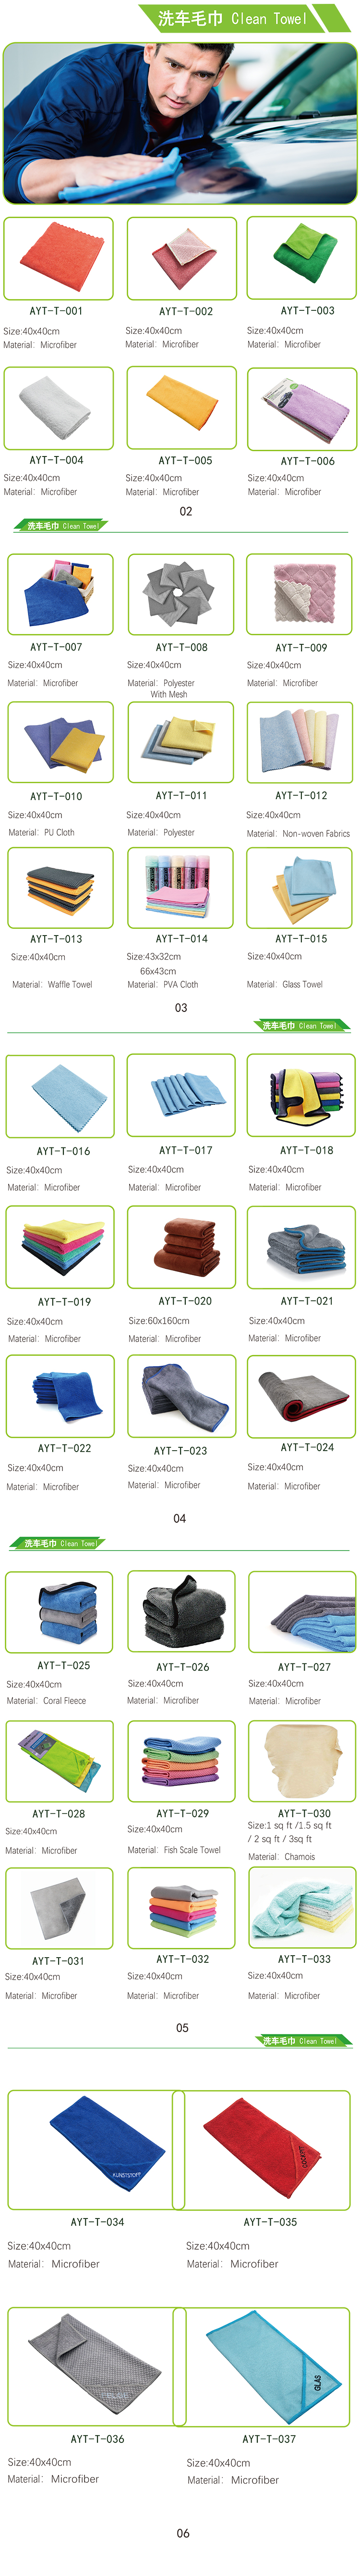 NINGBO AITE HOUSEWARES CO, LTD Katalog Za pranje brisač